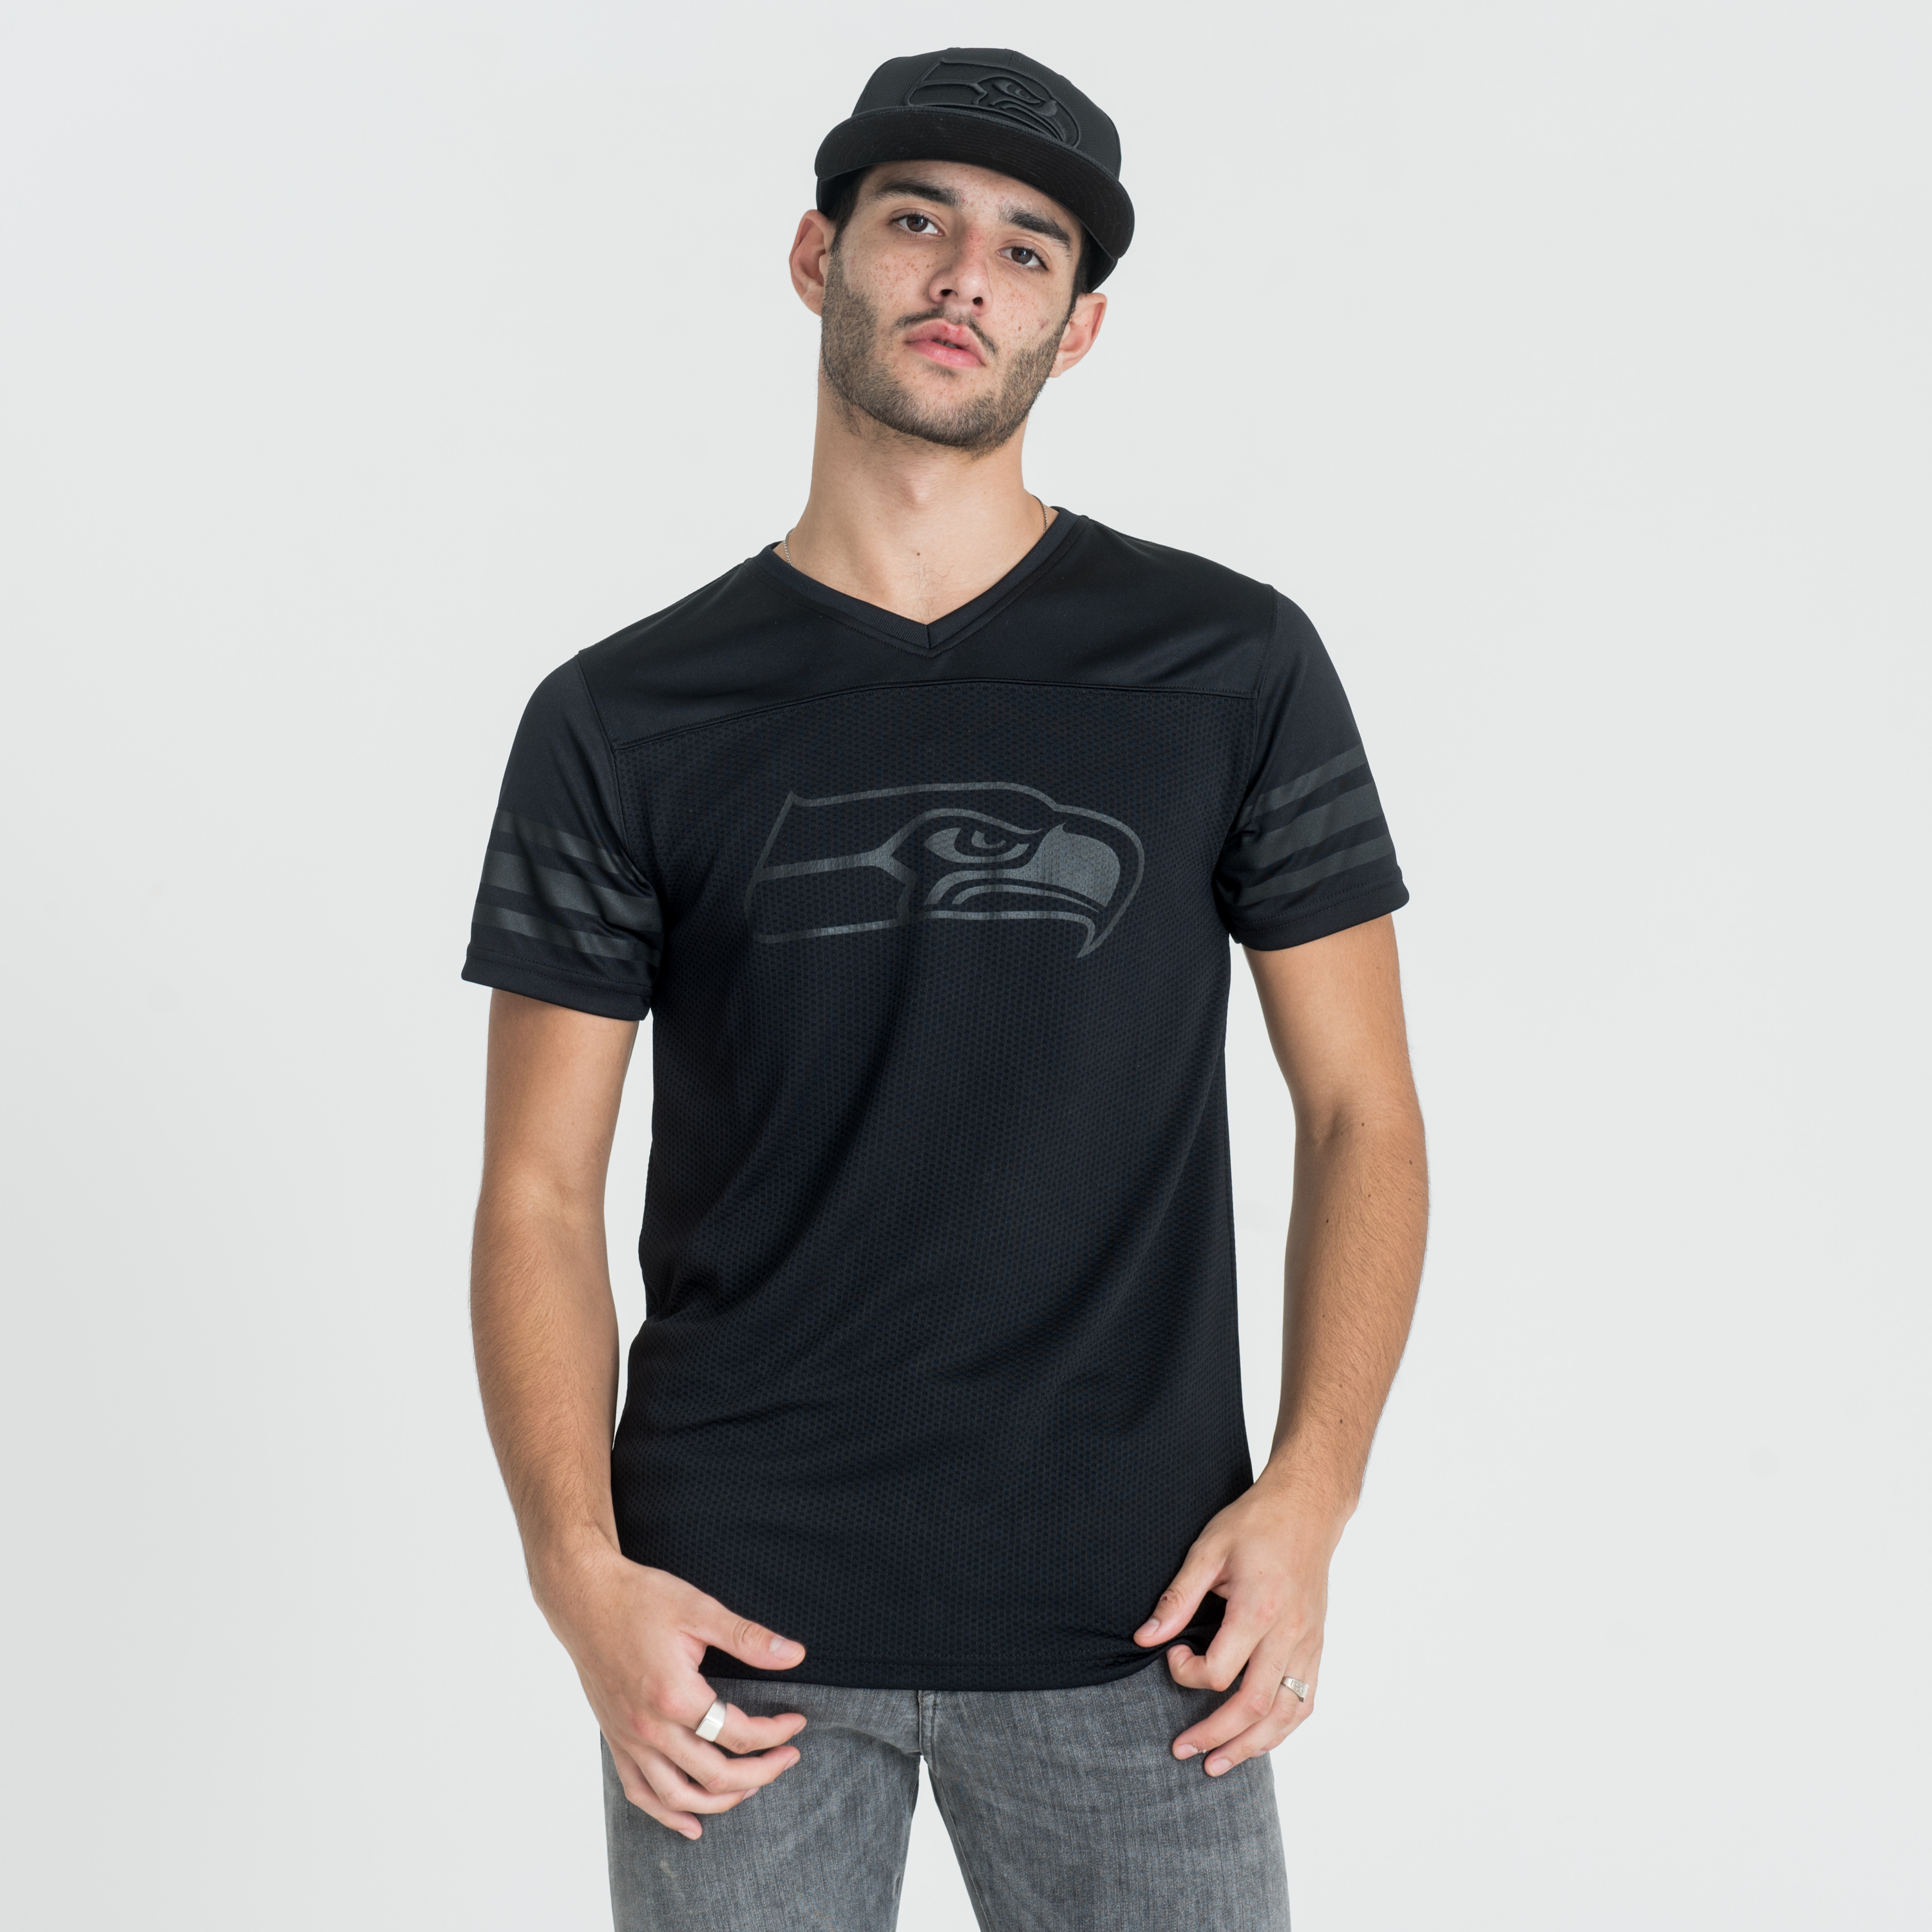 Camiseta para seguidores Seattle Seahawks Black on Black 2017